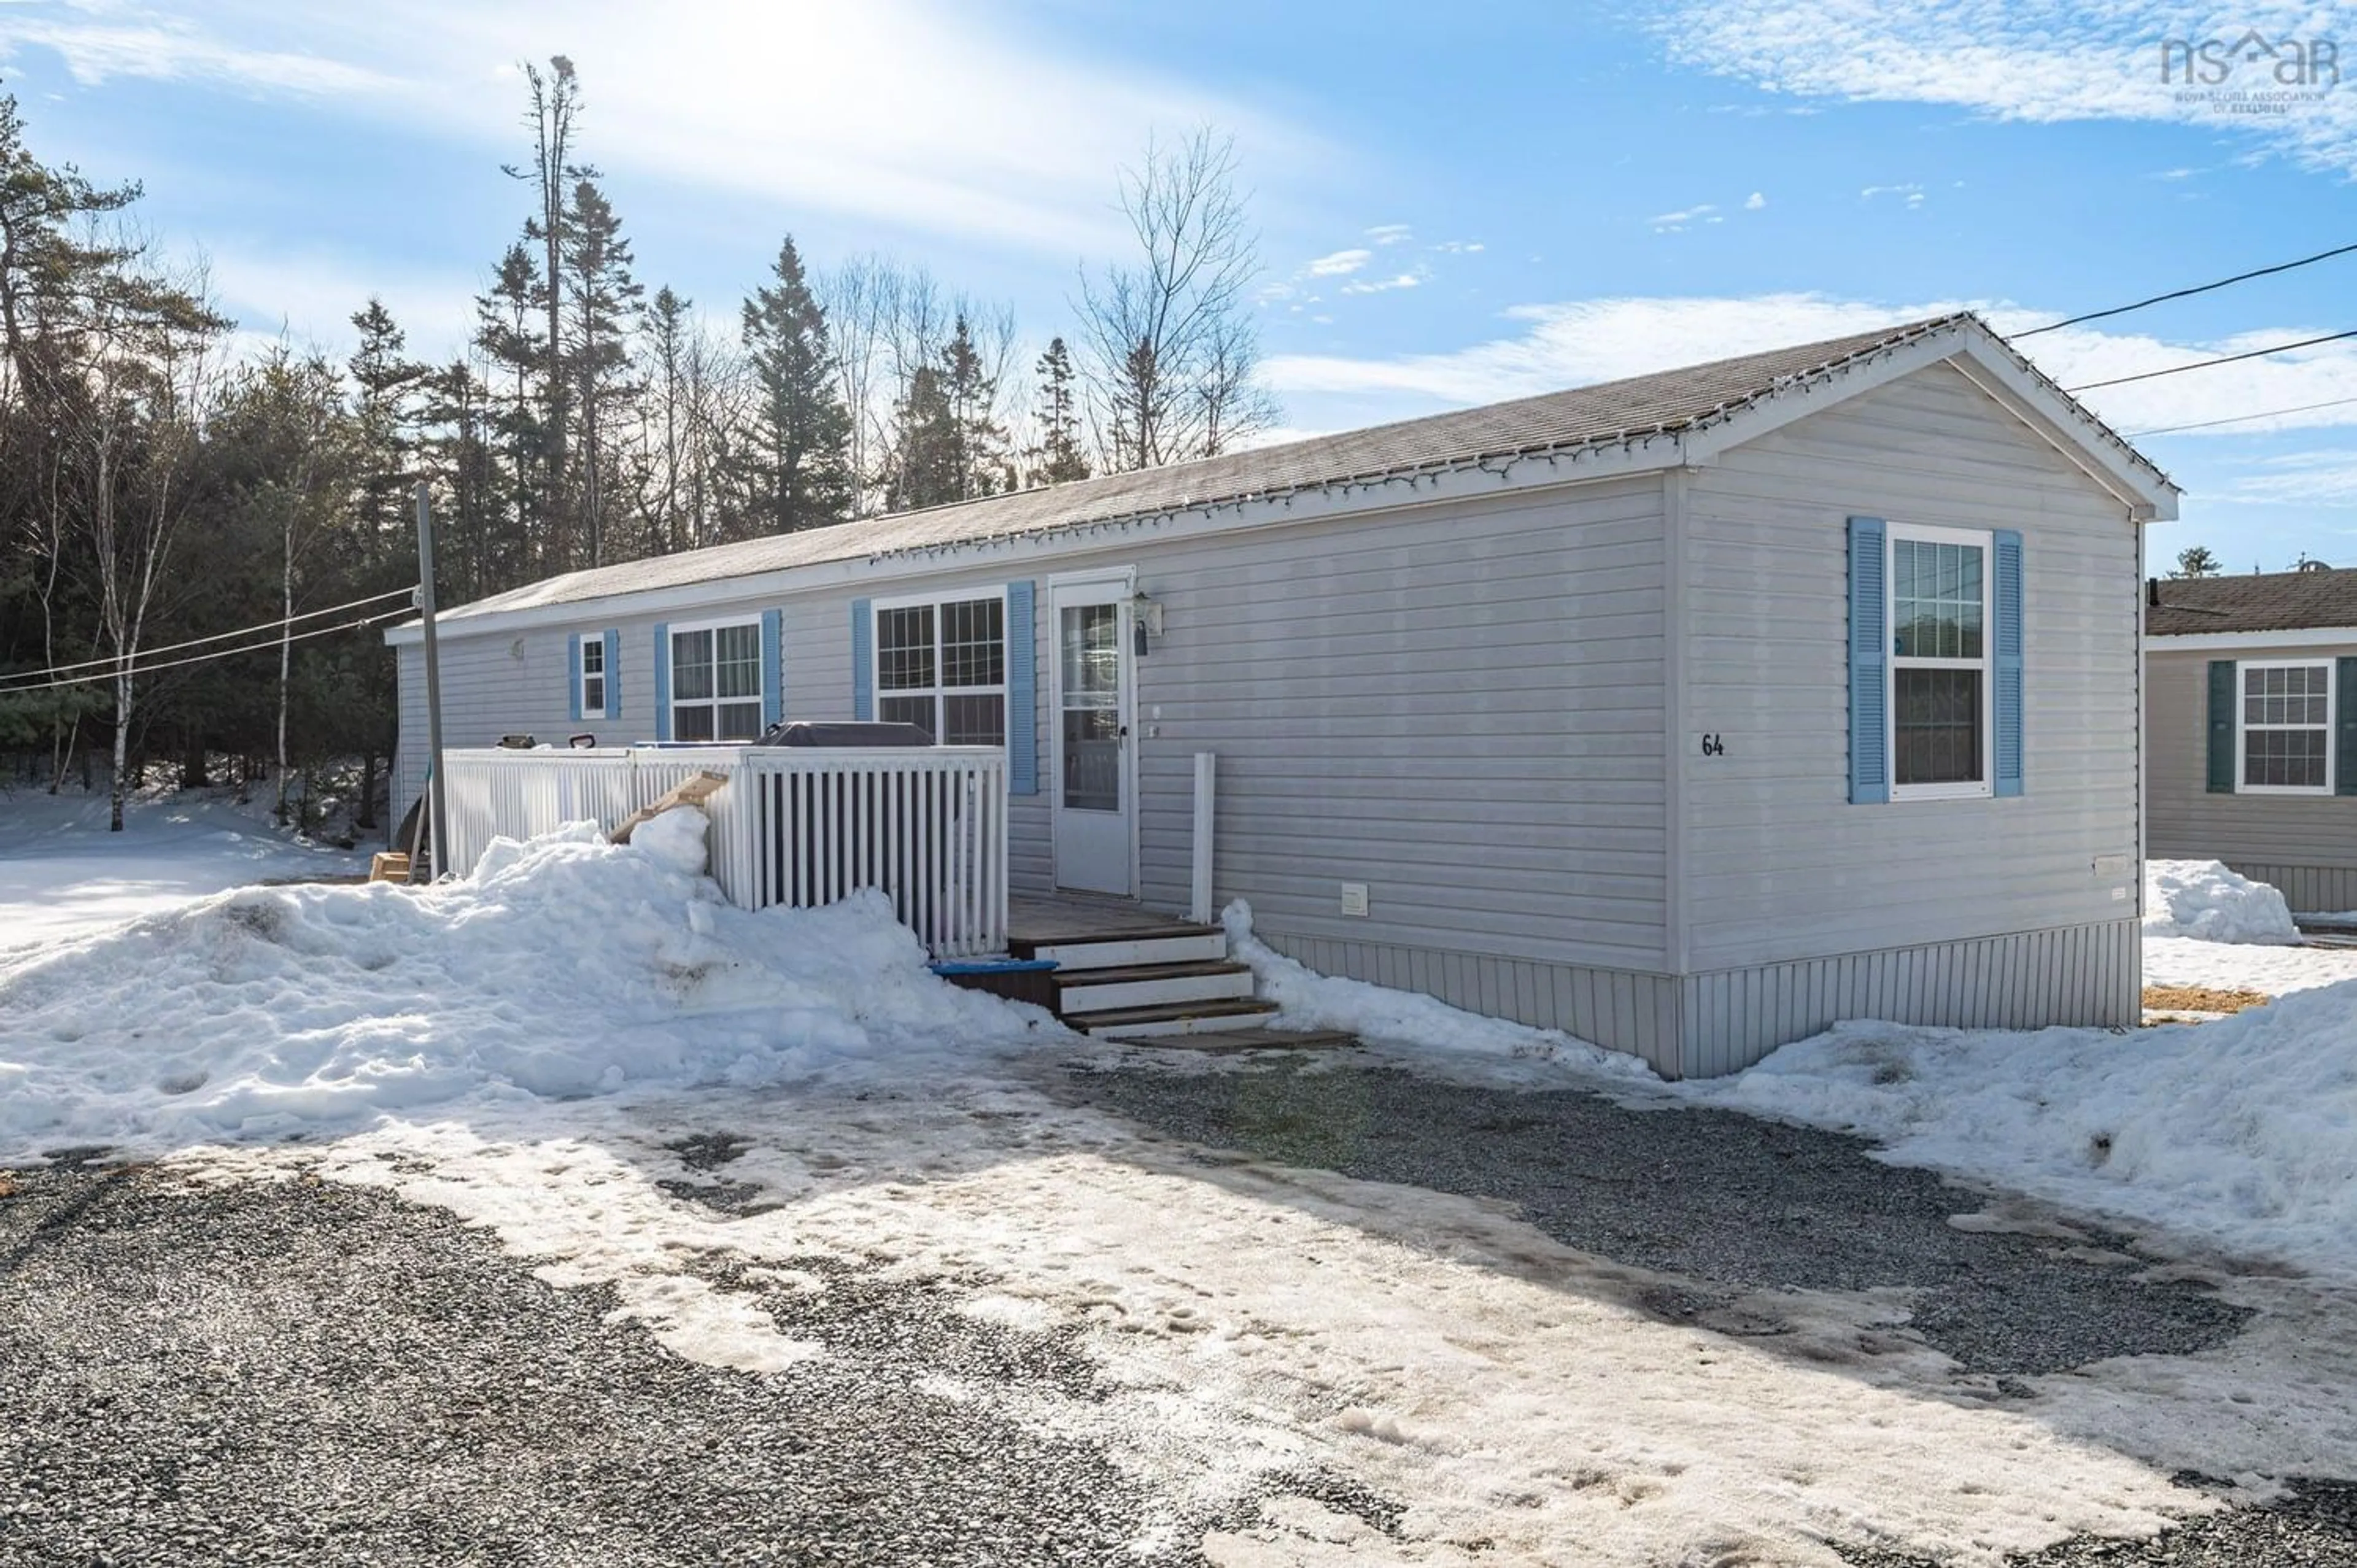 Home with unknown exterior material for 64 Bumpy Lane, Lake Echo Nova Scotia B3E 1B8